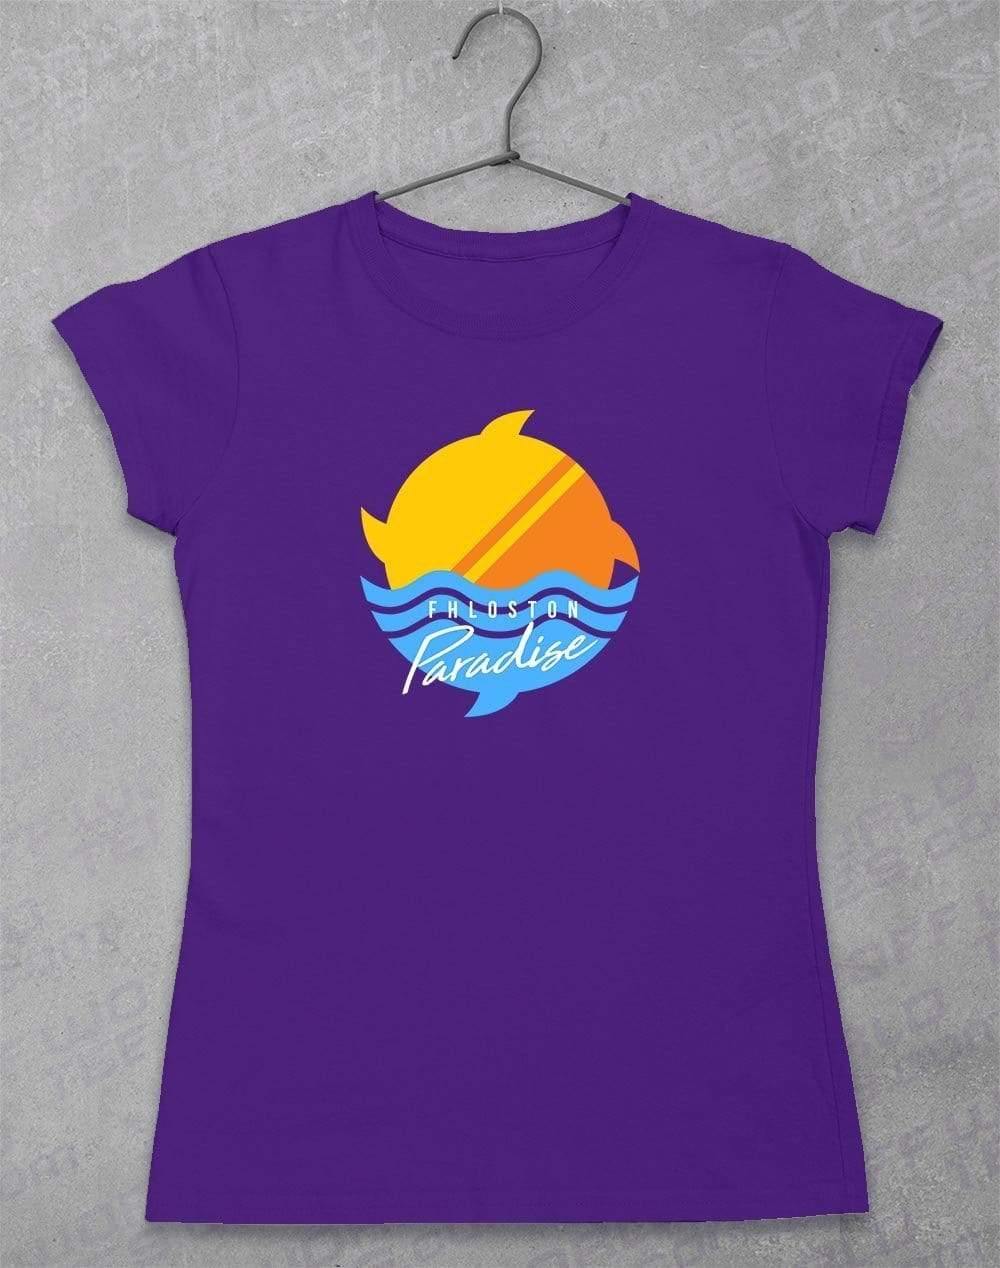 Fhloston Paradise Classic Women's T-Shirt 8-10 / Lilac  - Off World Tees